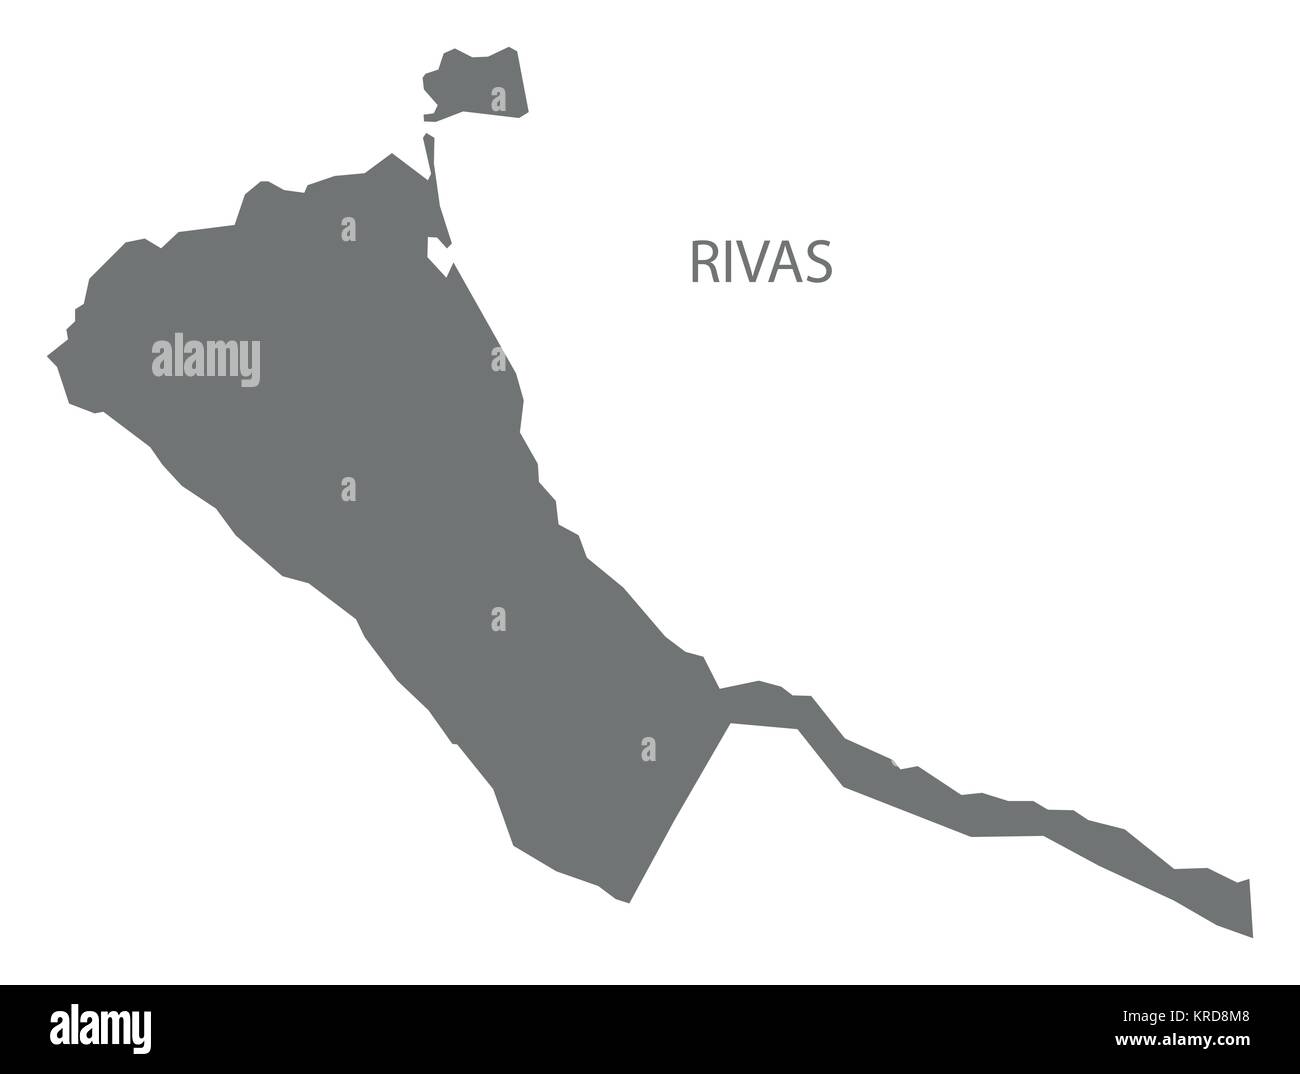 Rivas Karte von Nicaragua Grau Abbildung silhouette Form Stock Vektor